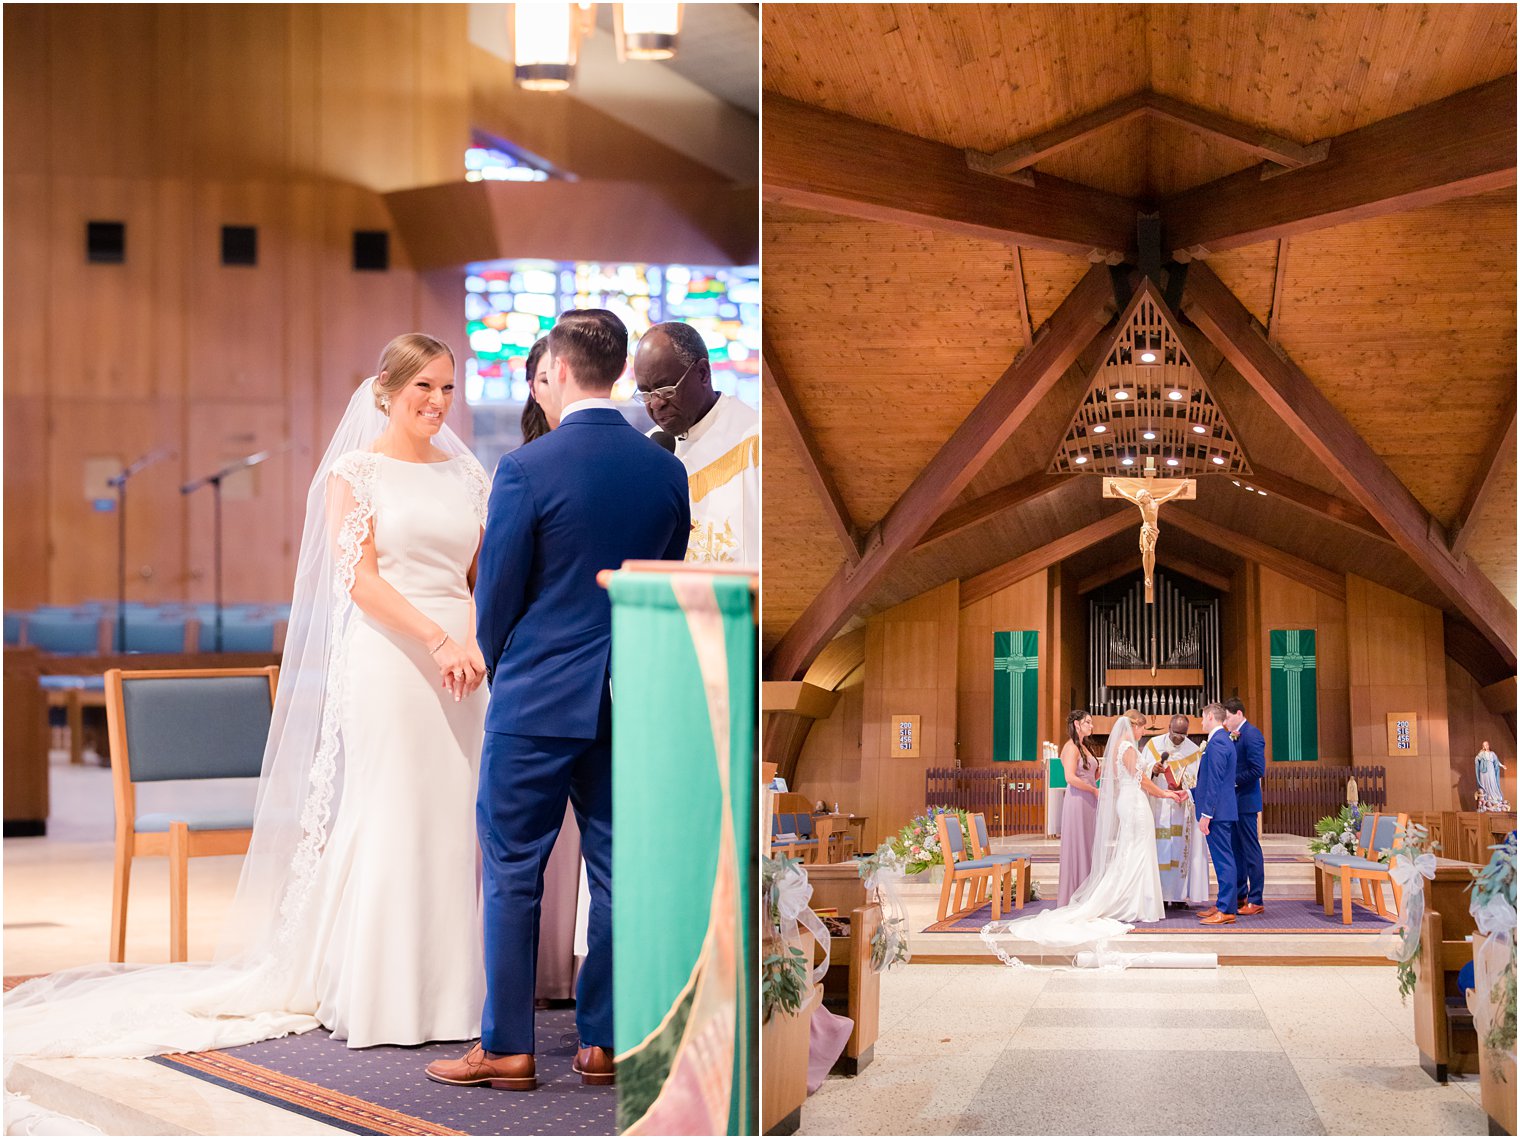 traditional NY church wedding photographed by Idalia Photography